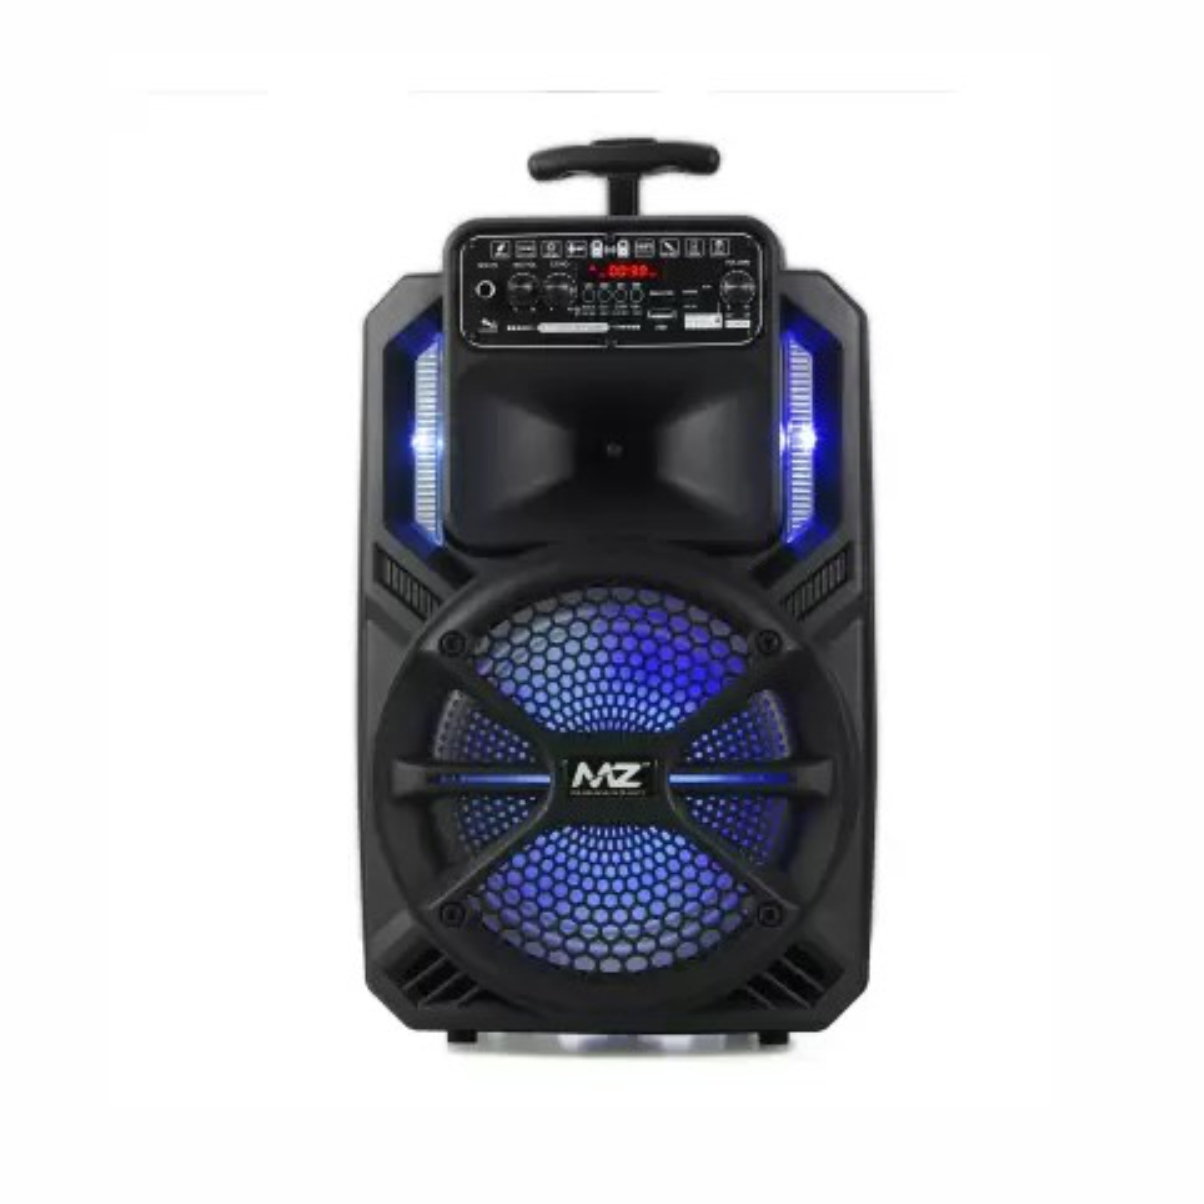 MZ M308 Dynamic Thunder Sound with wireless Mic trolley 10 W Bluetooth Party Speaker (Black, Stereo Channel) (PORTABLE KARAOKE SPEAKER) 